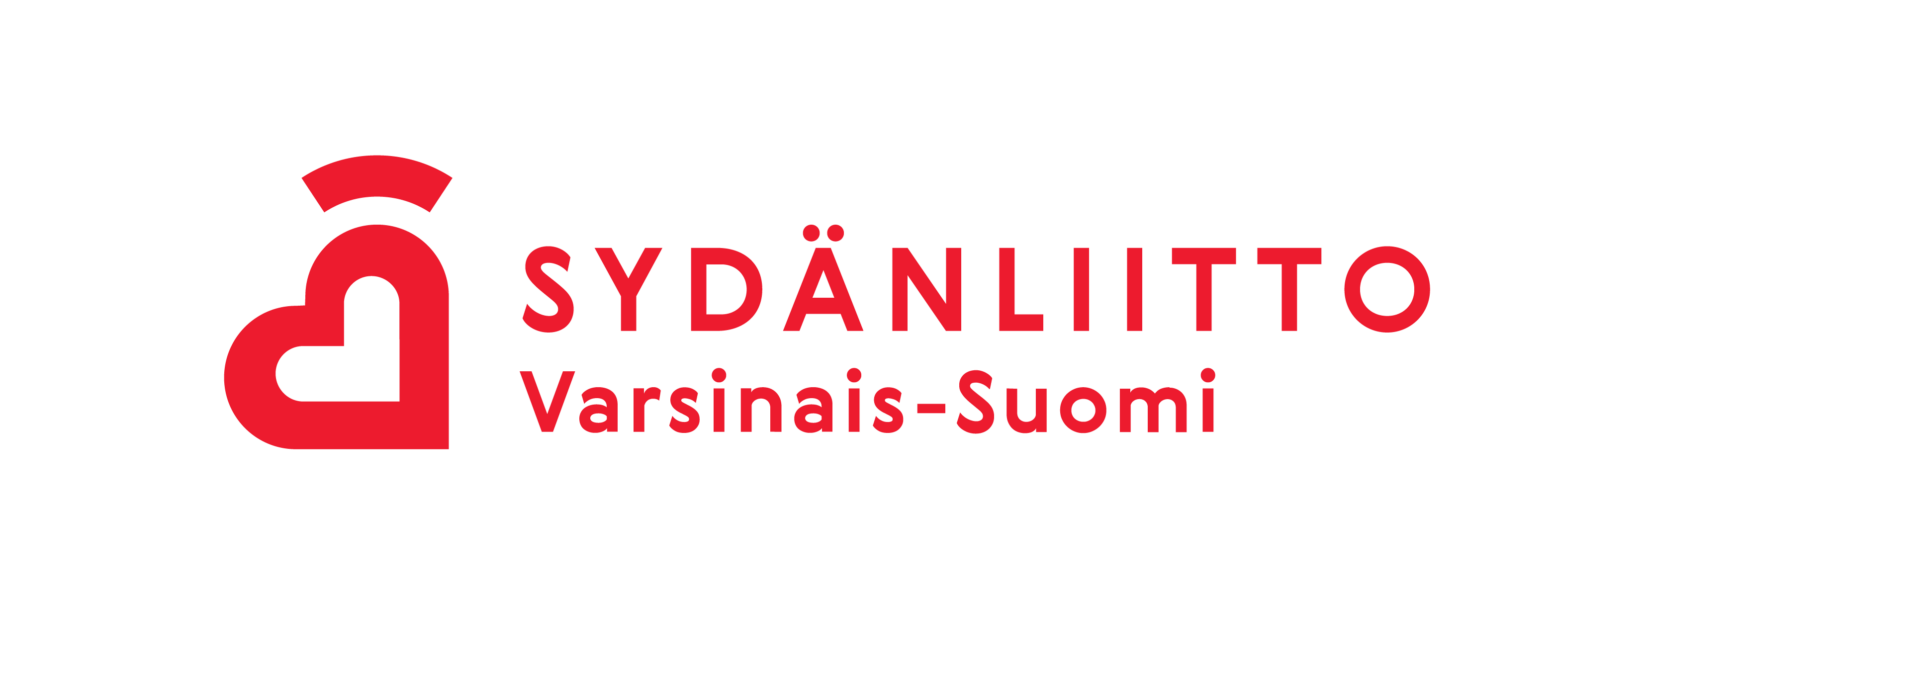 Varsinais-Suomen Sydänpiiri Ry